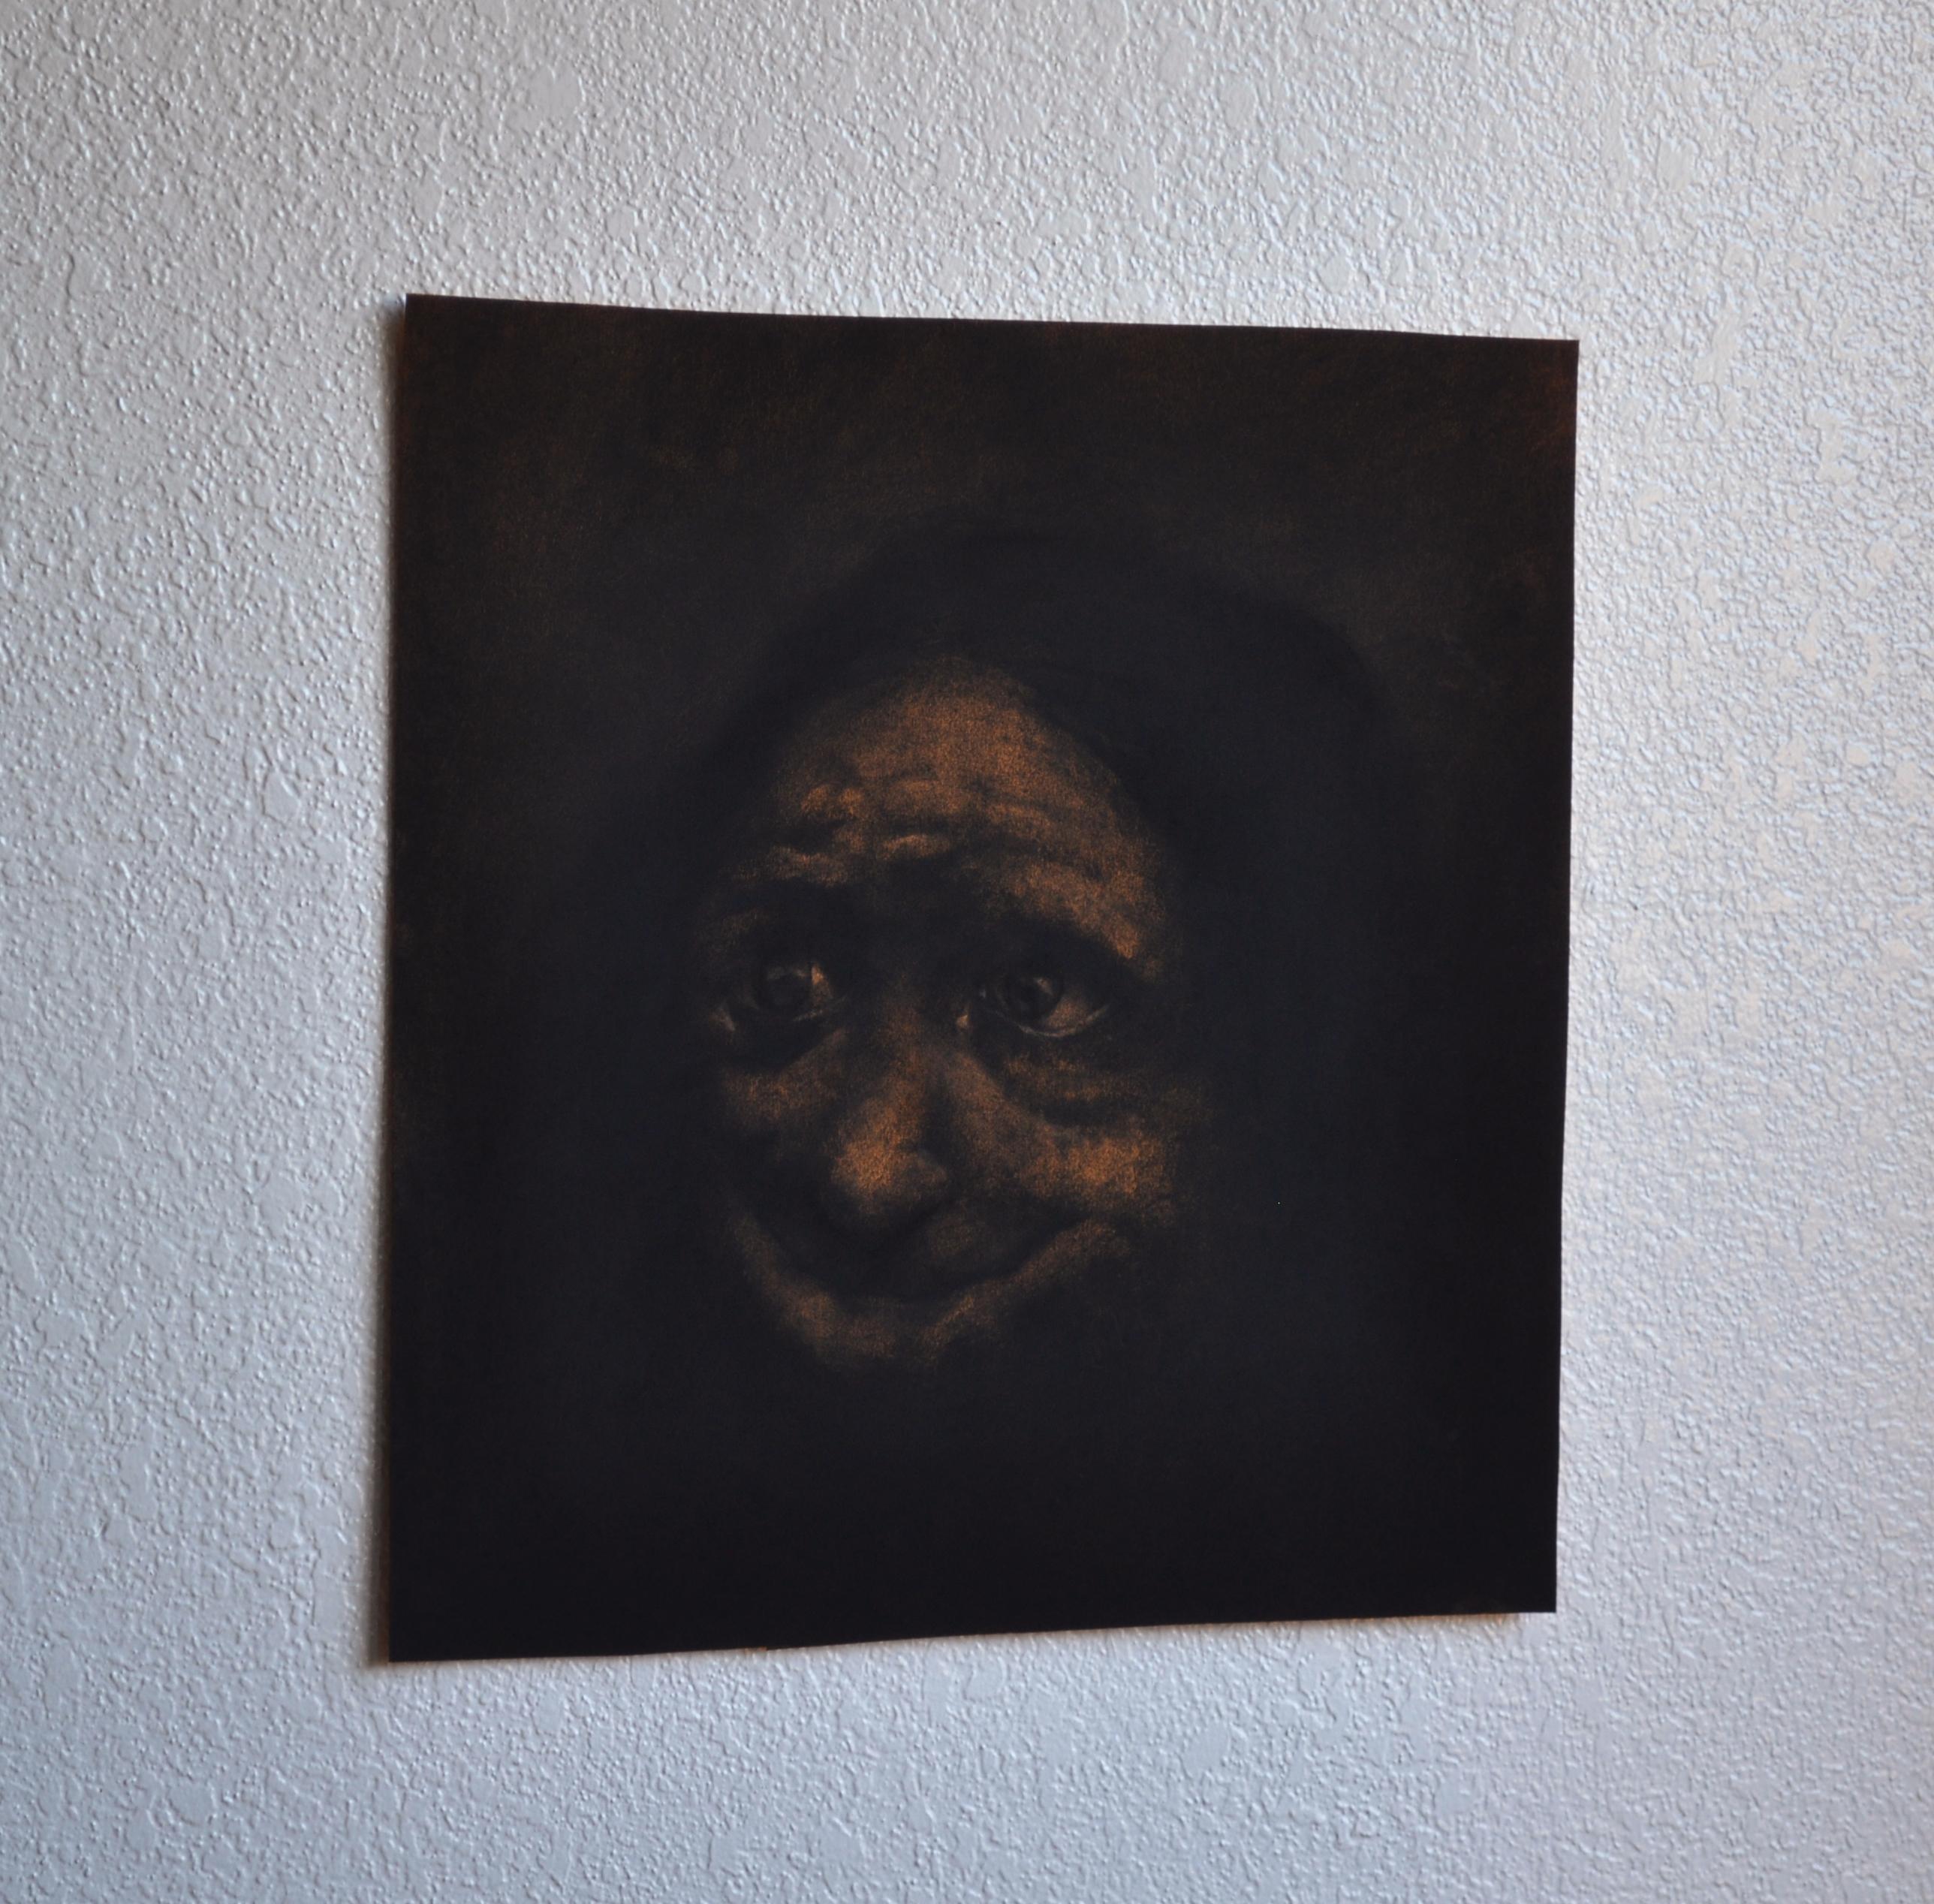 Grotesque Old Woman (Surrealismus), Art, von Drew McSherry